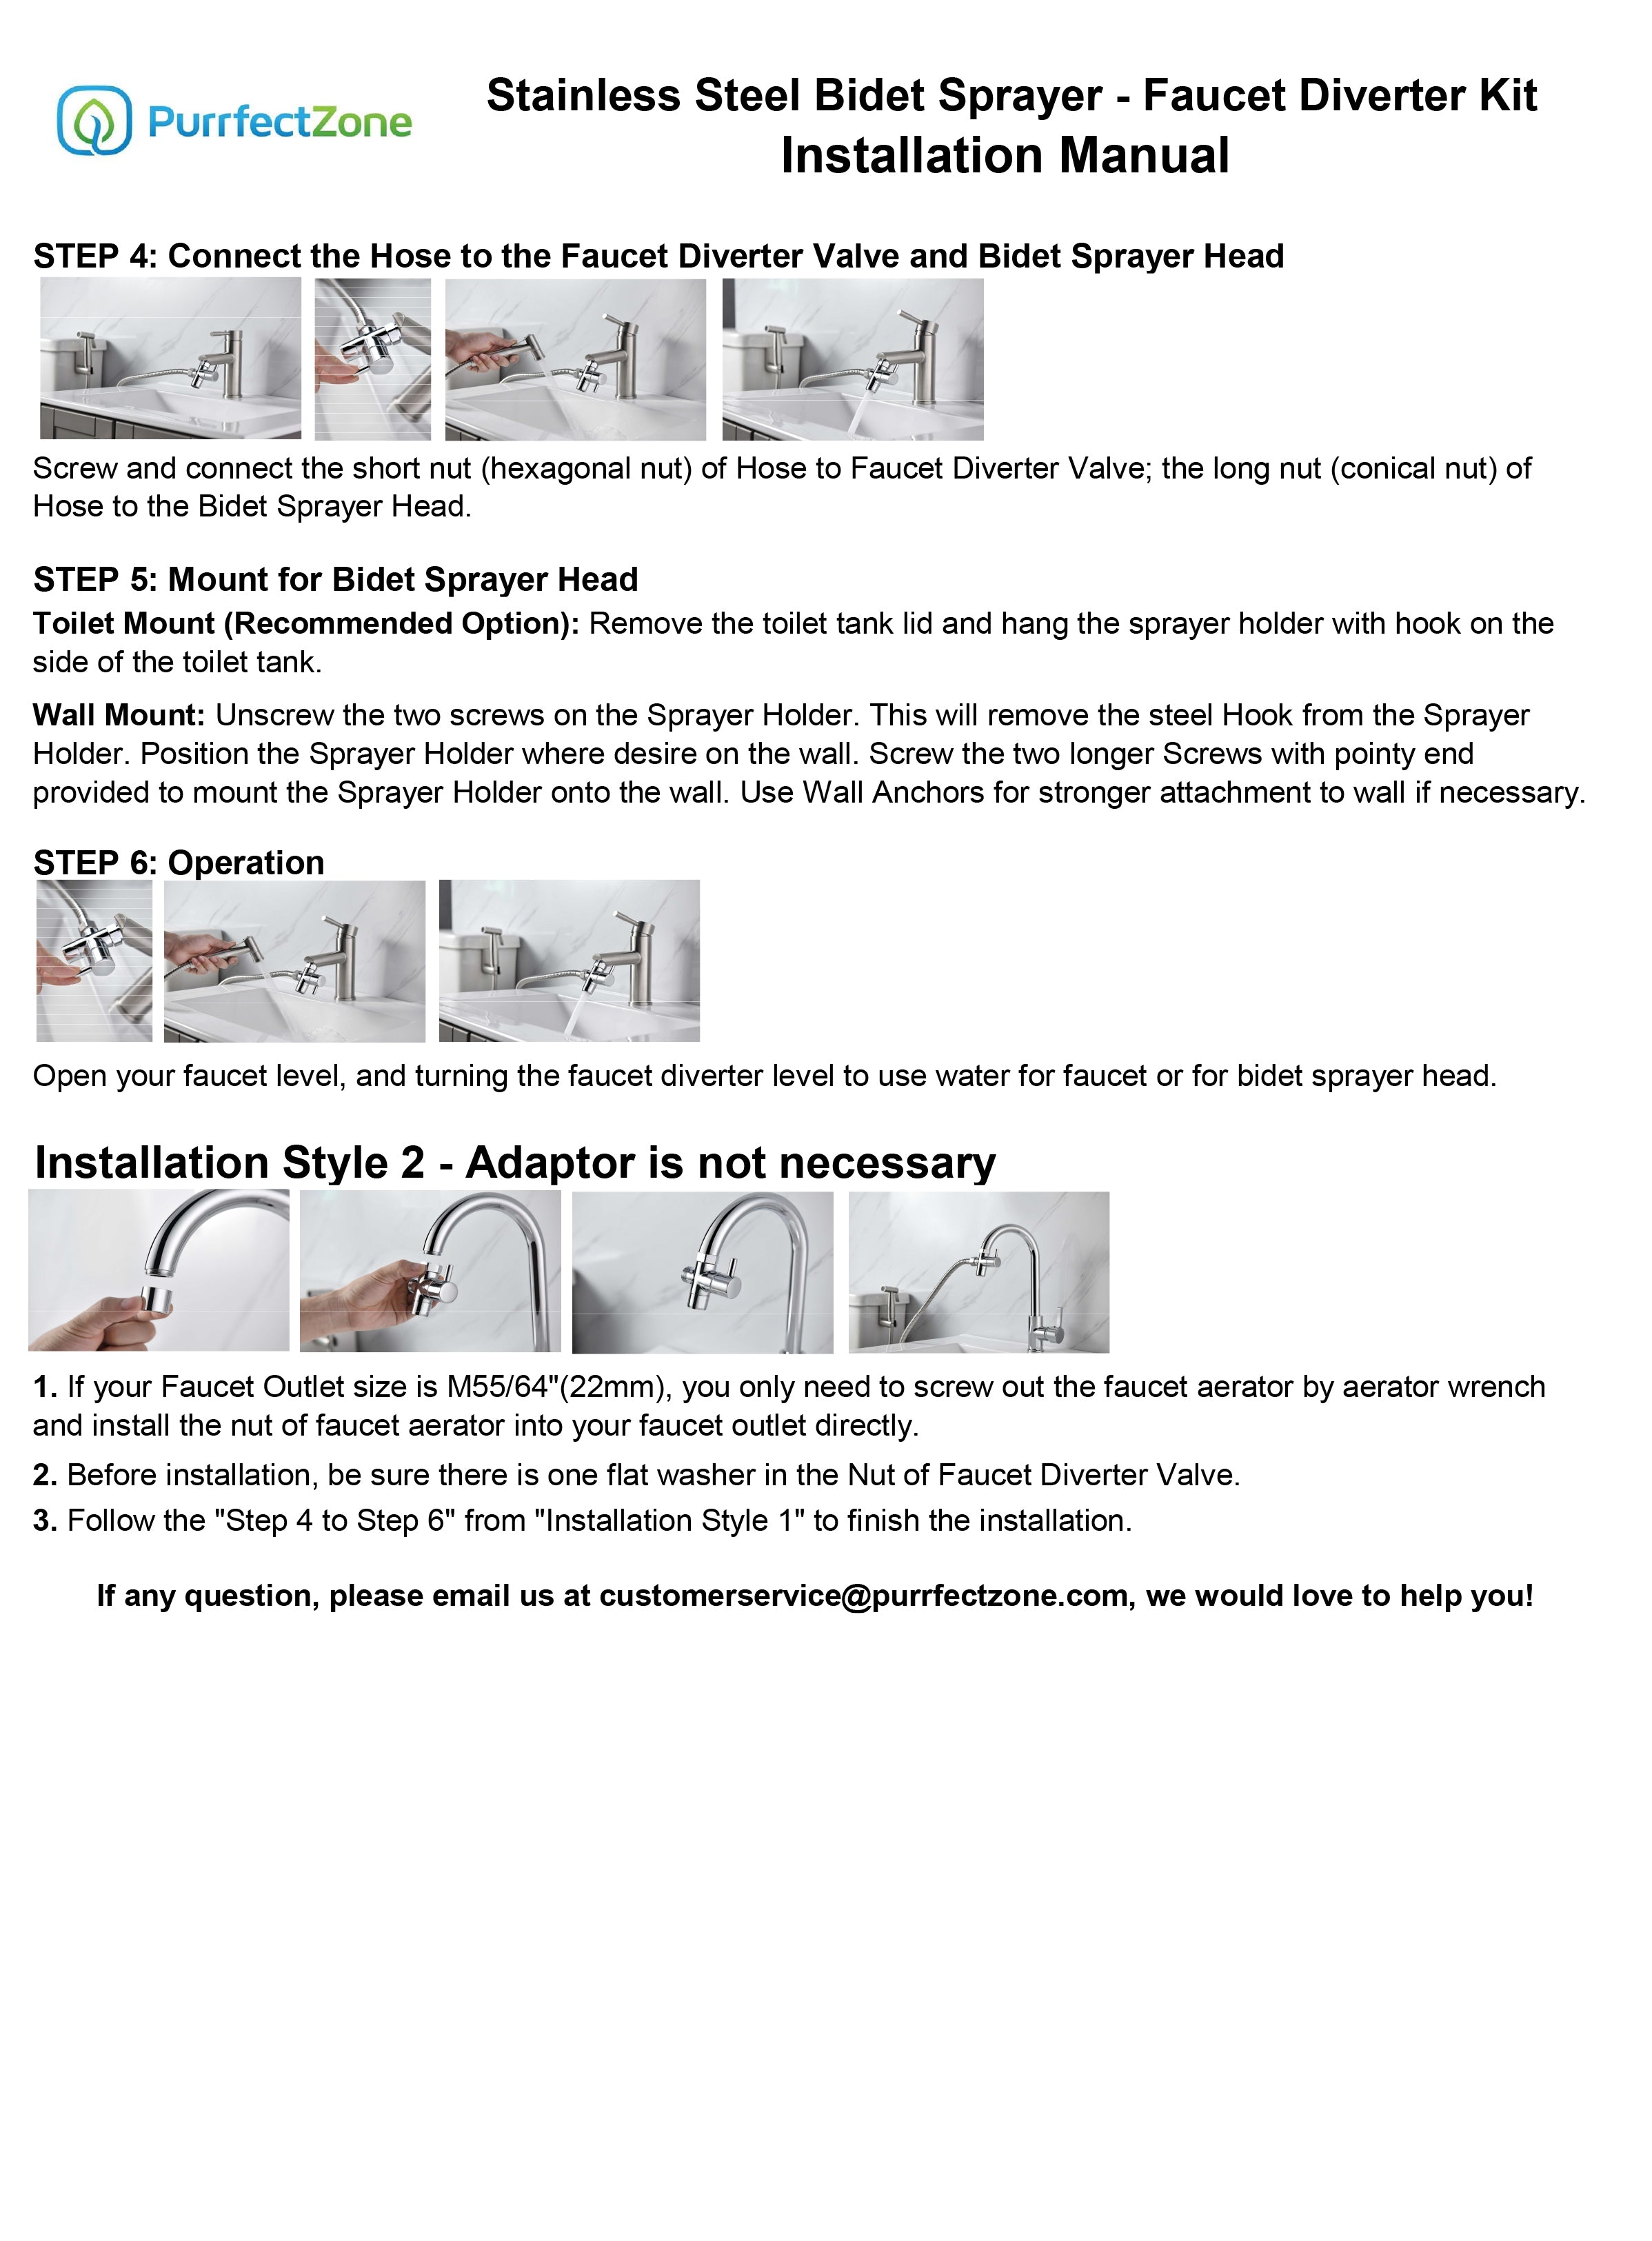 Faucet Diverter Kit Installation